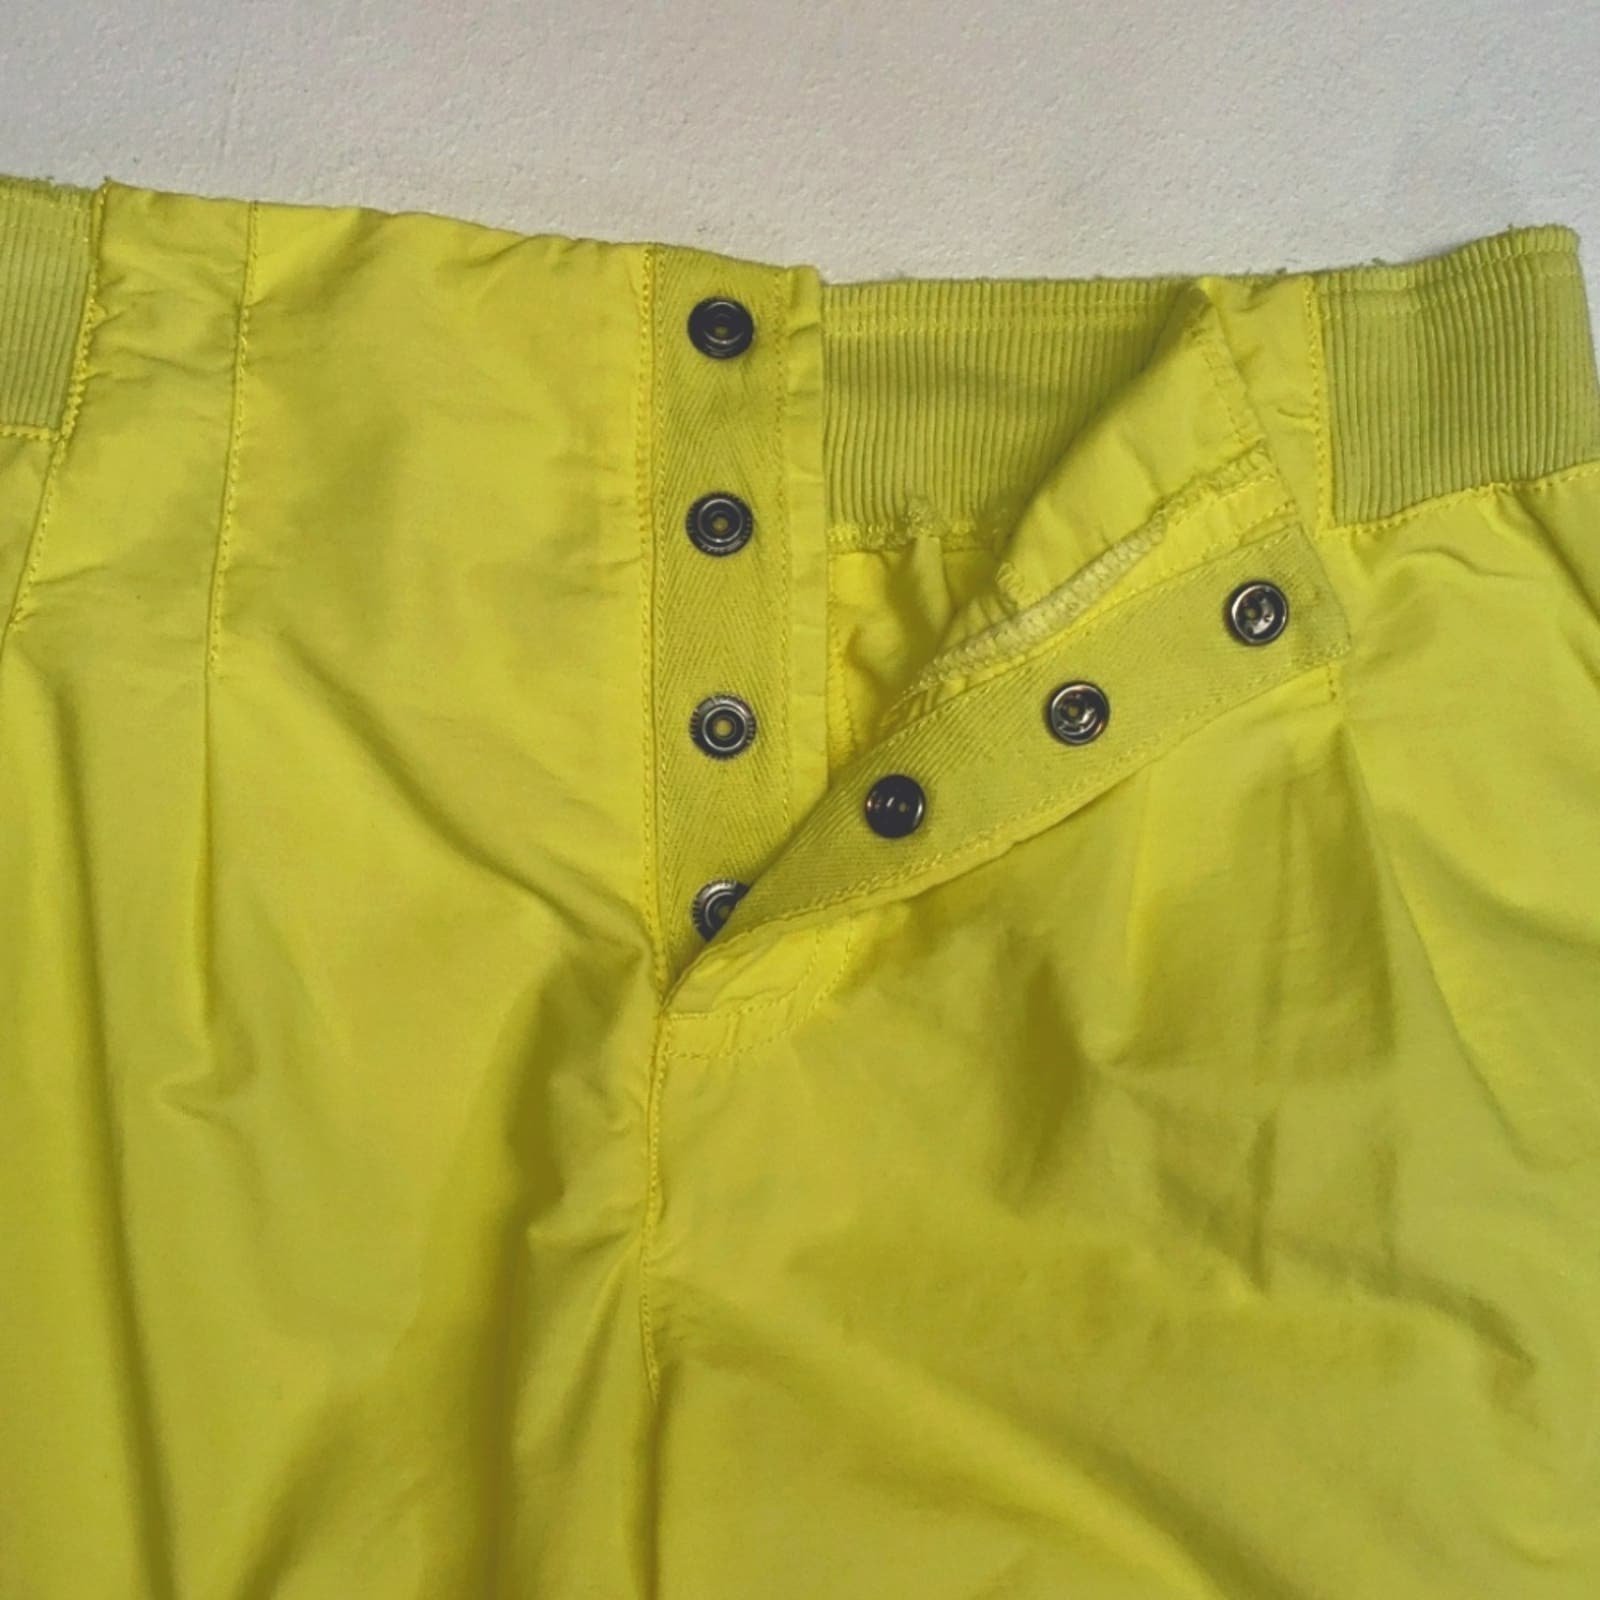 Factory Direct  Free People Movement Mesmerize Me Solid Pants Women´s Size Medium M0DdFYVZS Hot Sale